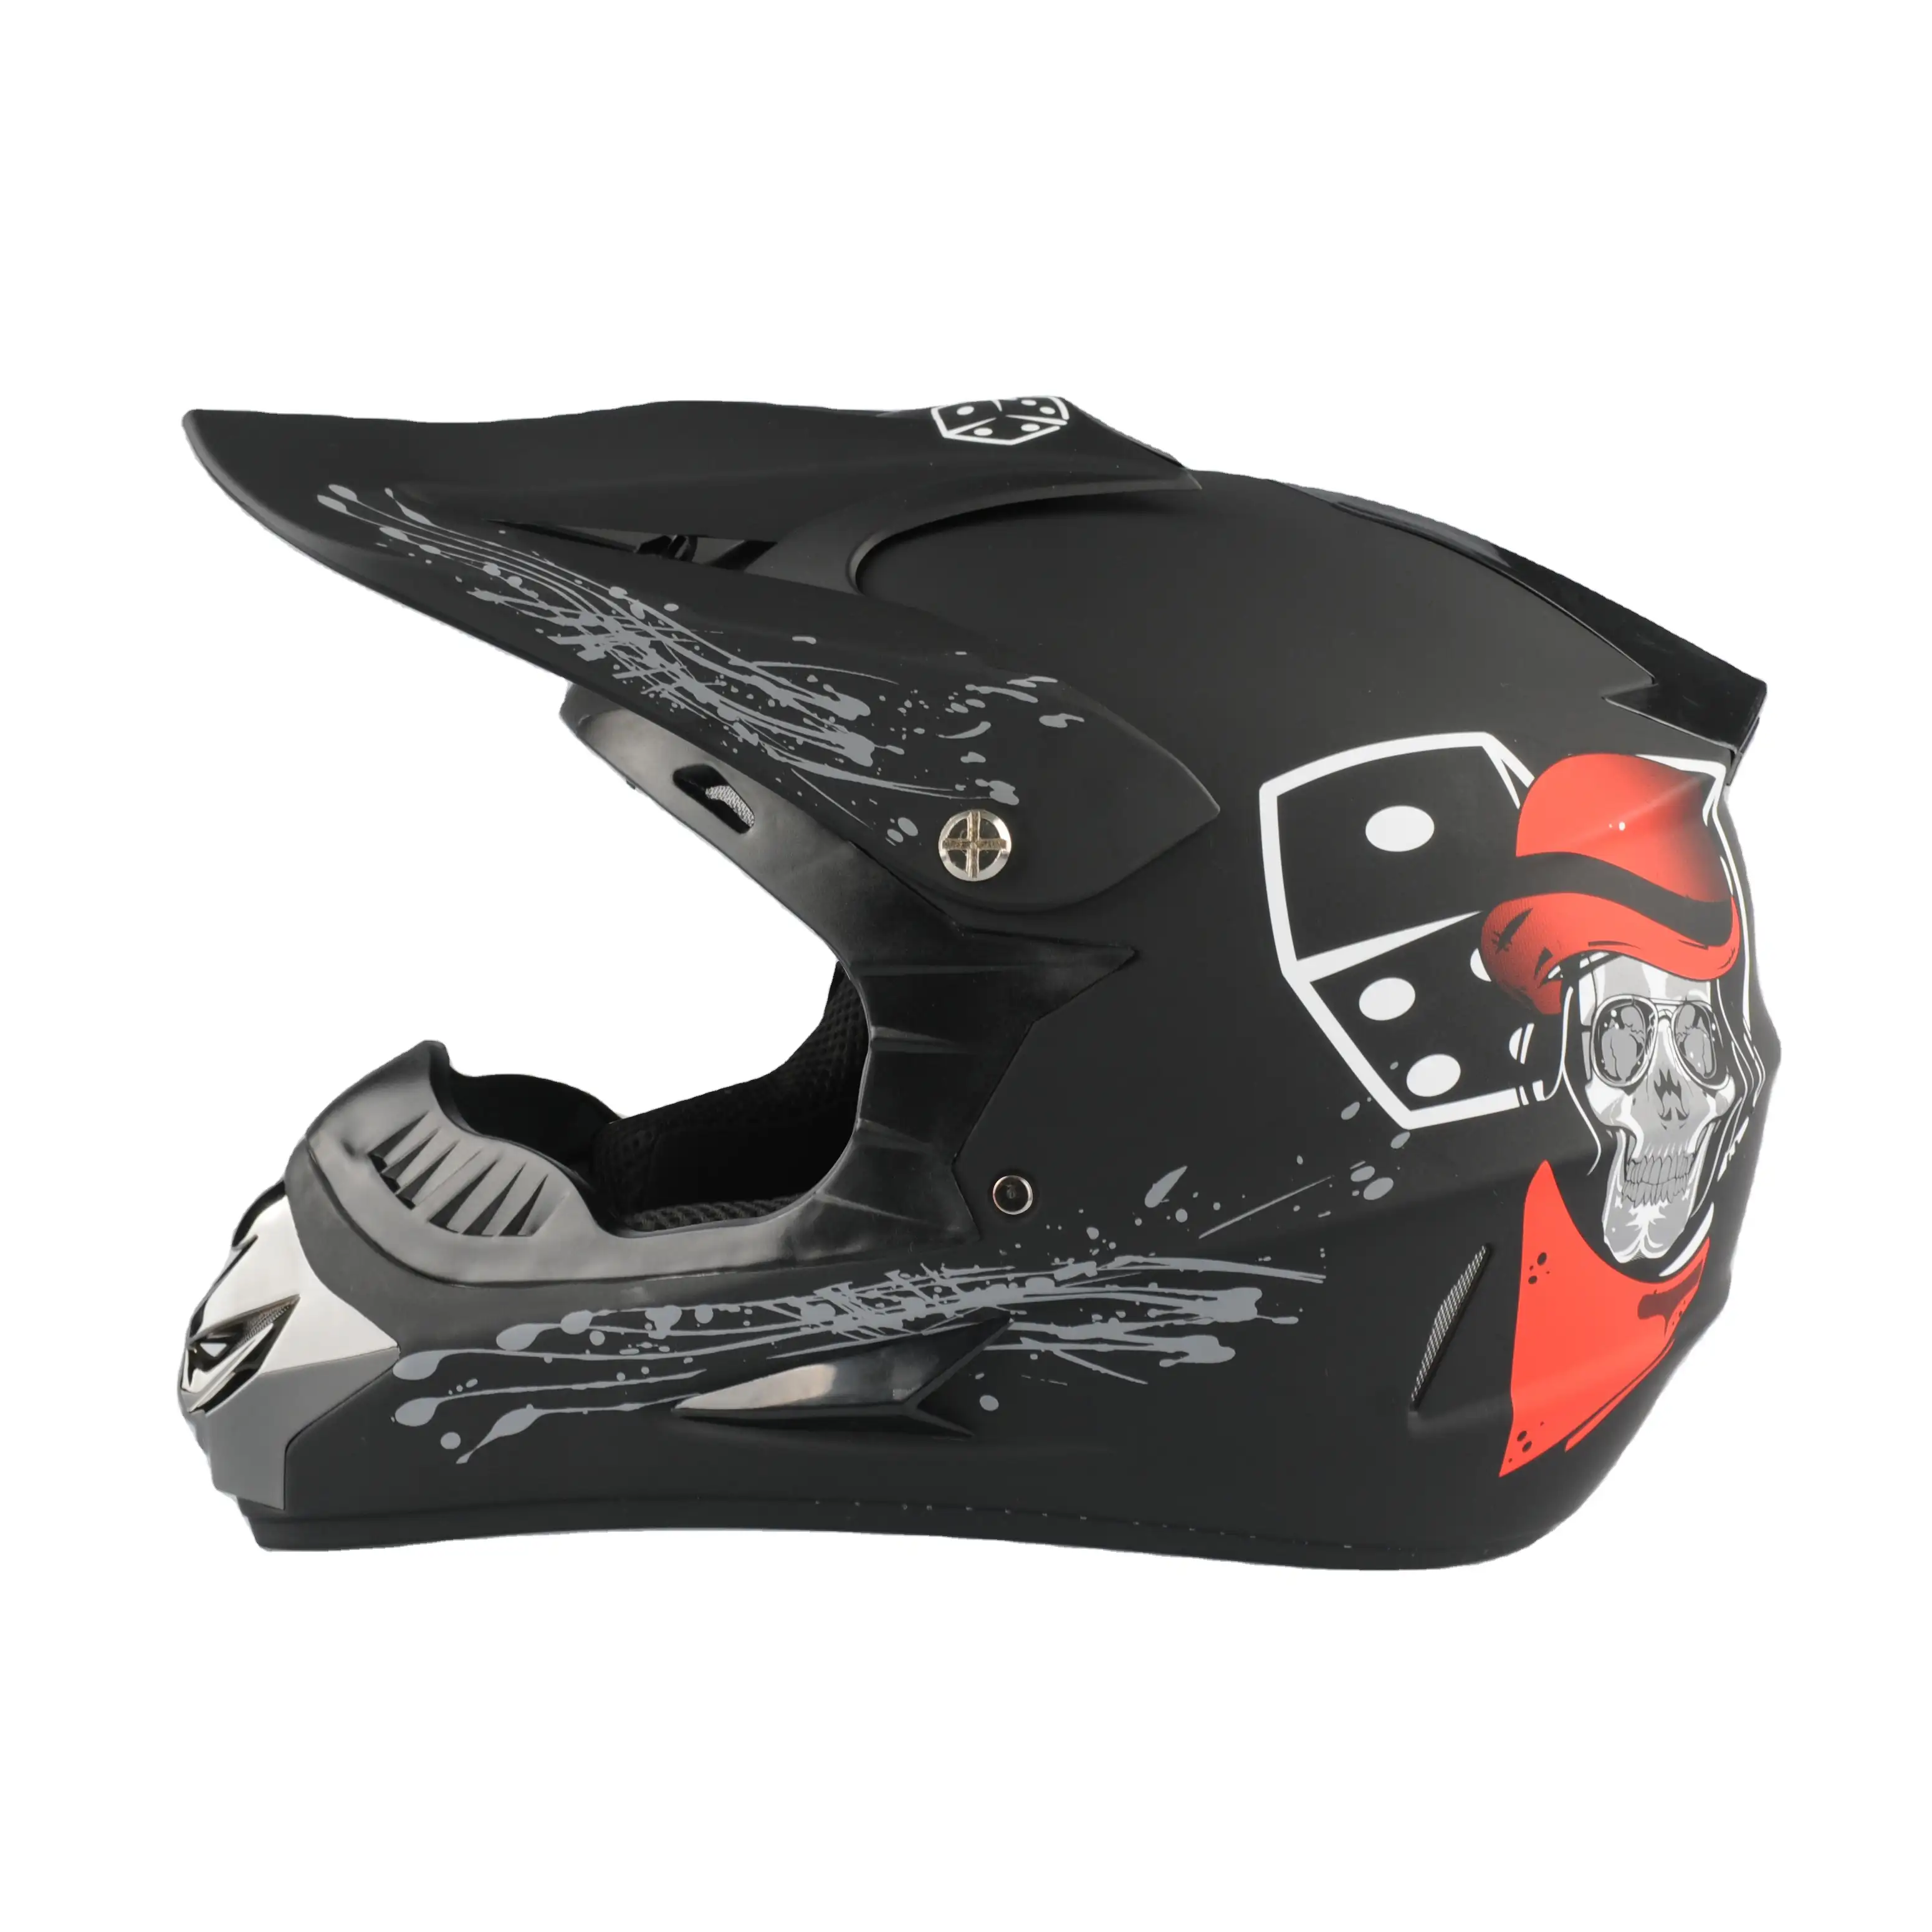 MOTOGO Helm Sepeda Motor Wajah Penuh, Helm Sepeda Motor Olahraga Downhill Model Baru Dual, Helm Sepeda Motor Warna Hitam